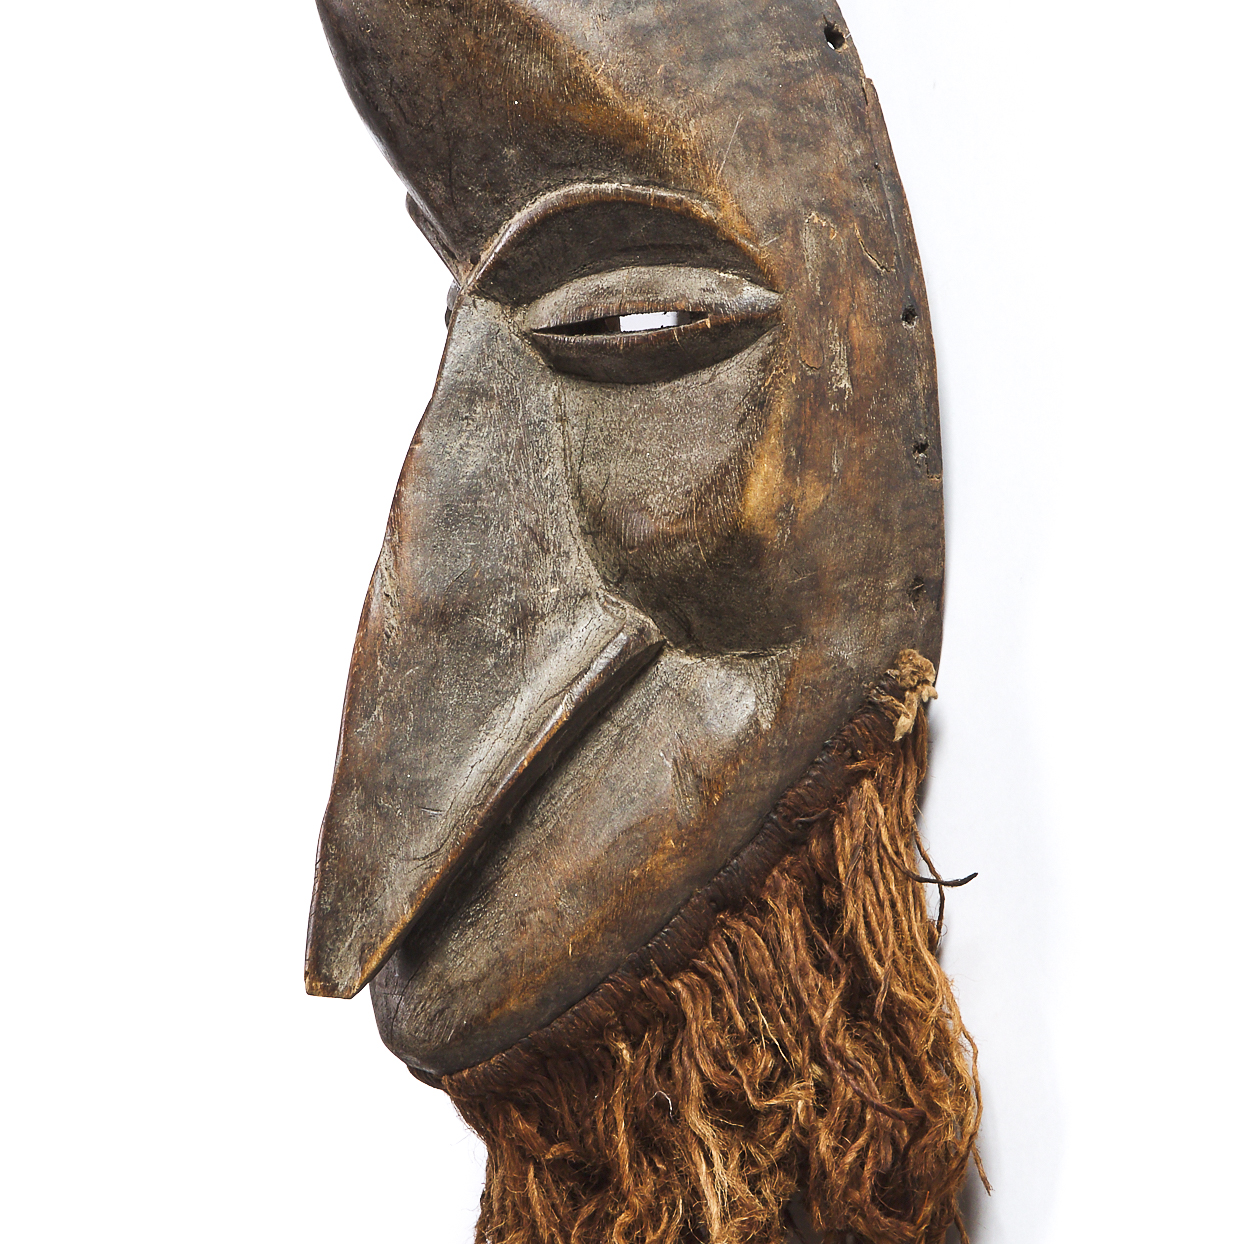 Dan Gagon Mask, Ivory Coast/Liberia, mid to late 20th century